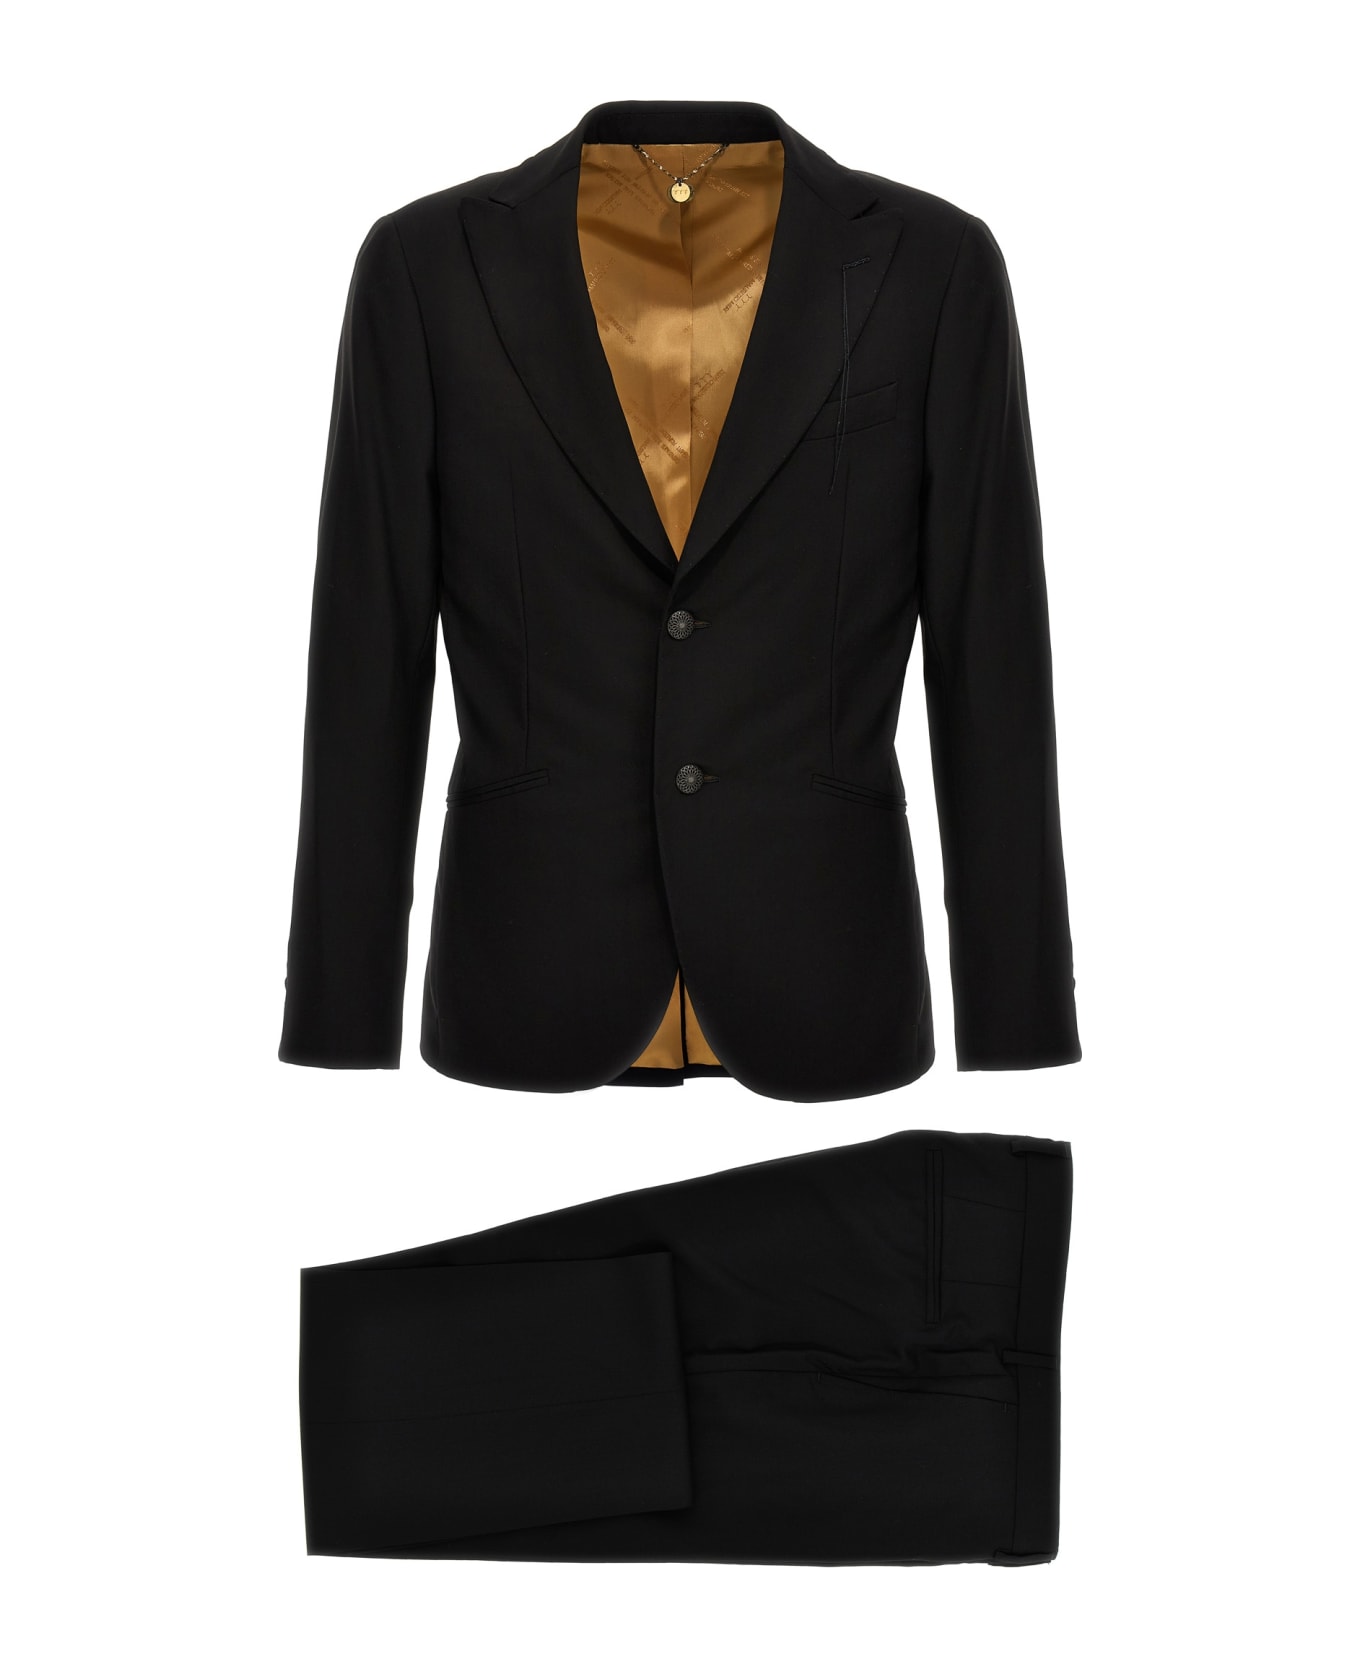 Maurizio Miri 'kery Arold' Suit - Black  